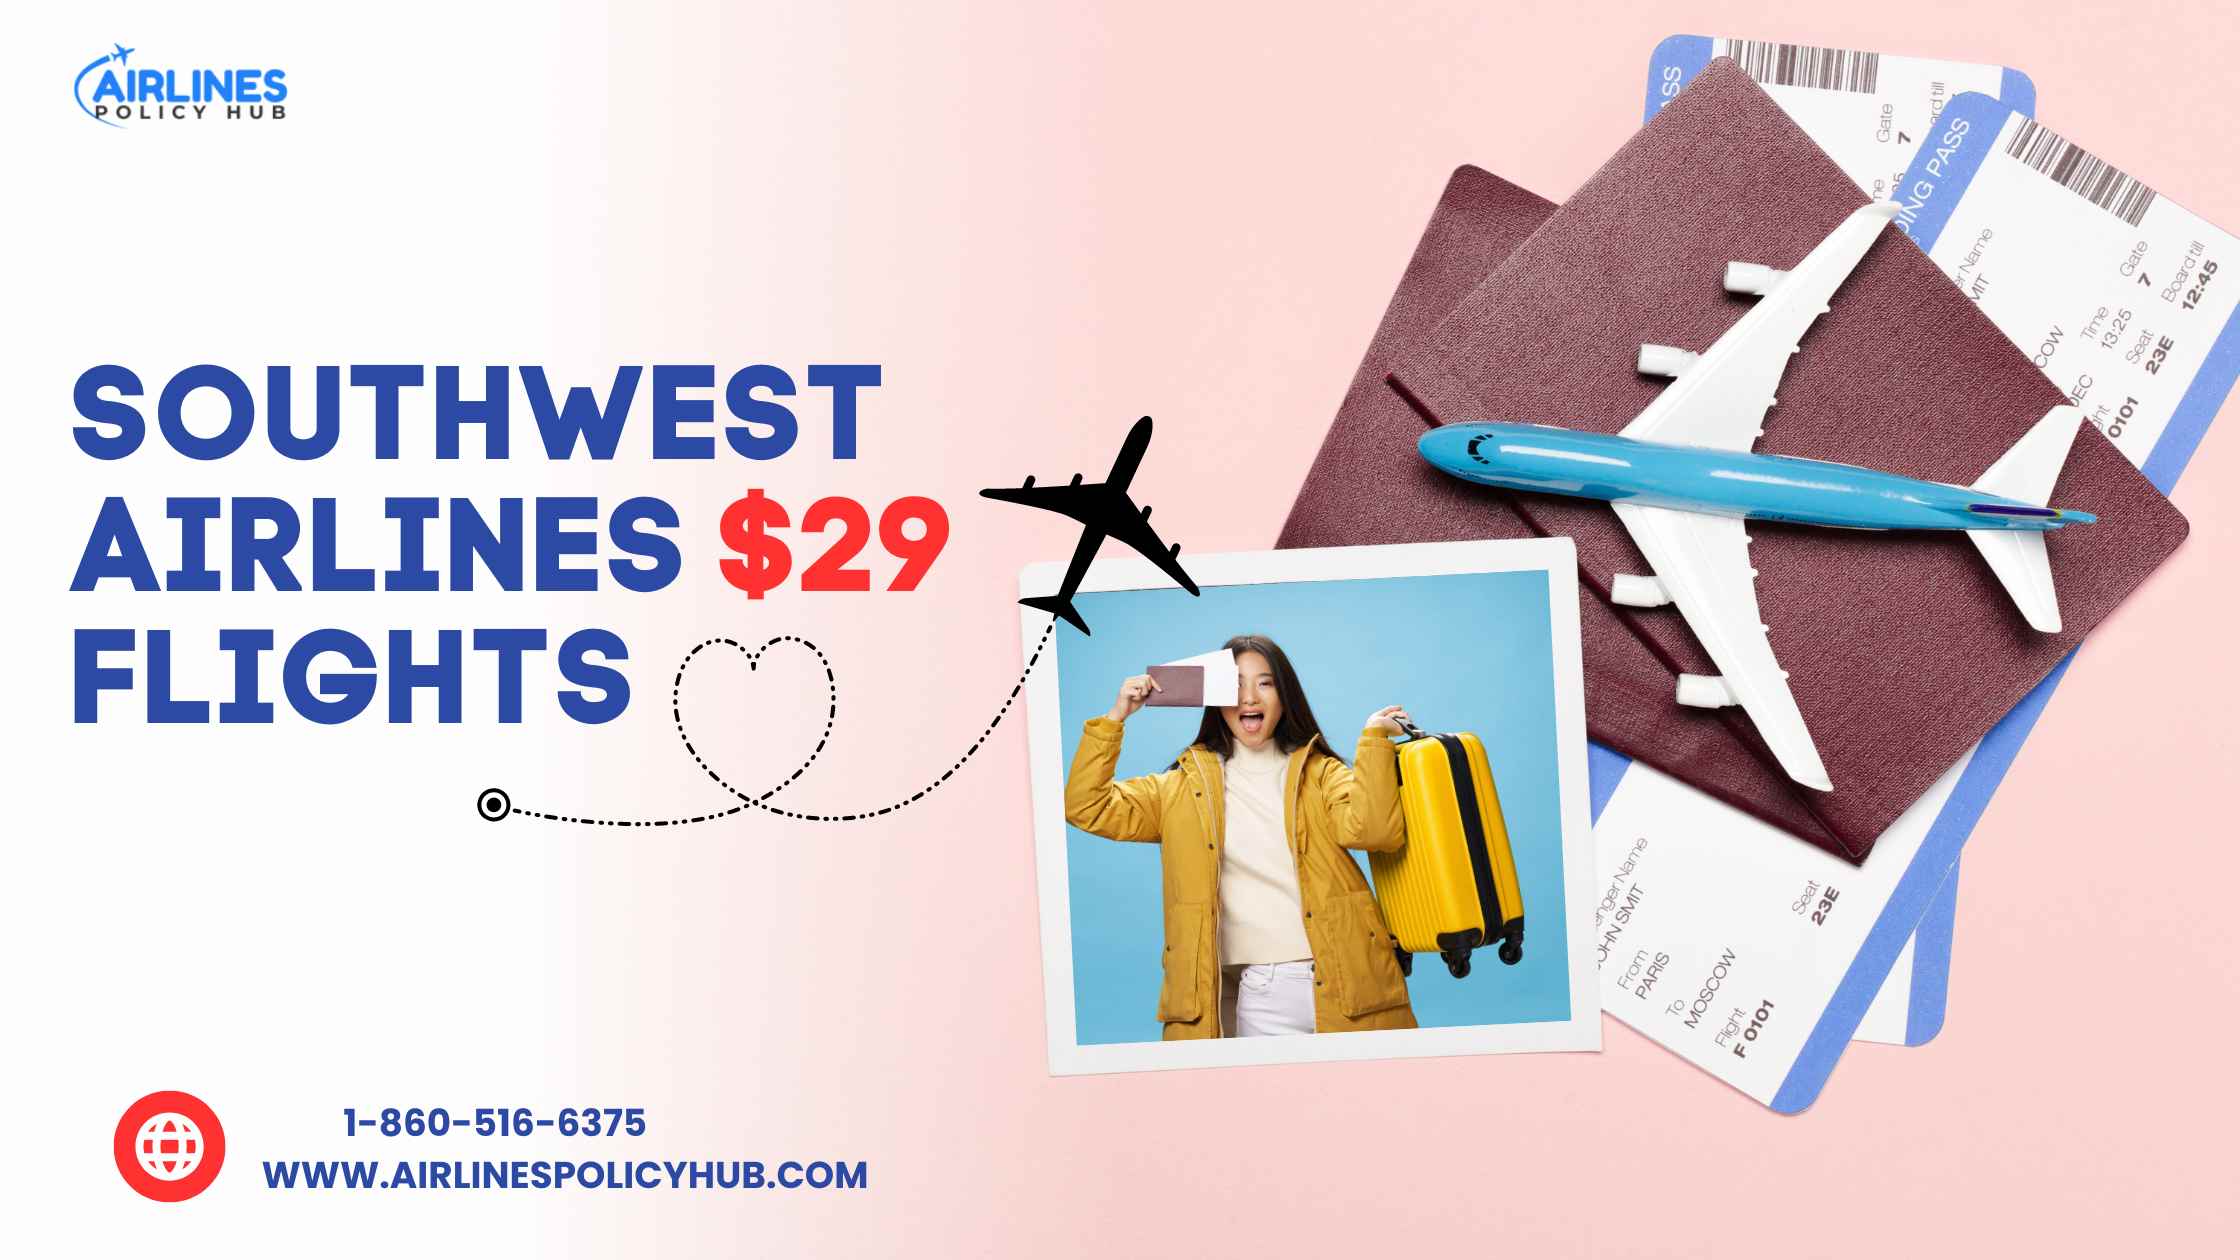 Southwest Airlines $29 flights